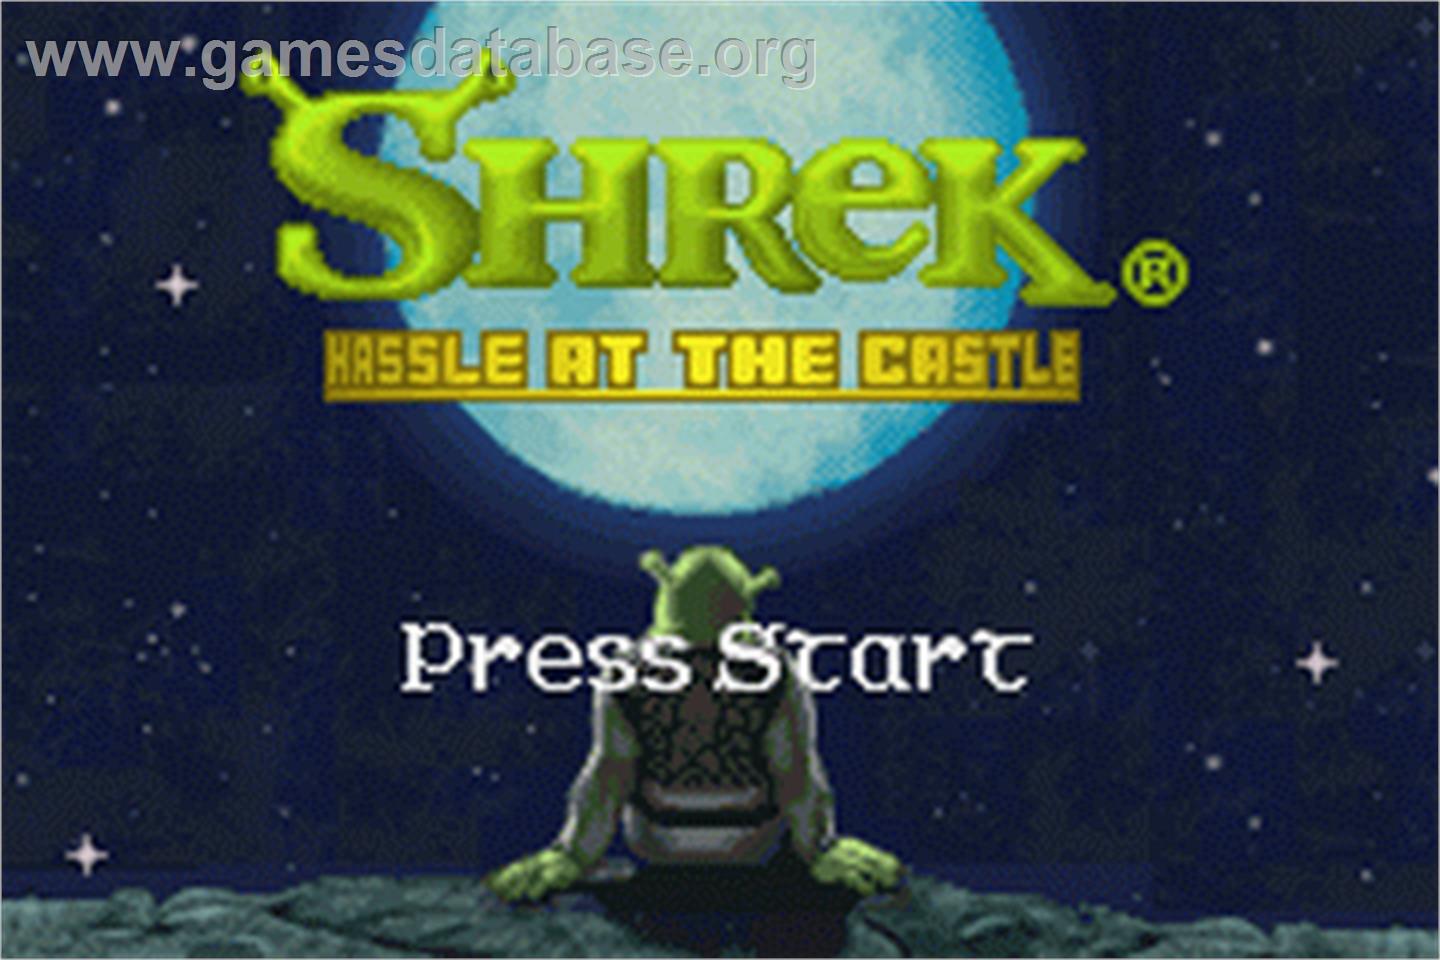 Shrek: Hassle at the Castle - Nintendo Game Boy Advance - Artwork - Title Screen